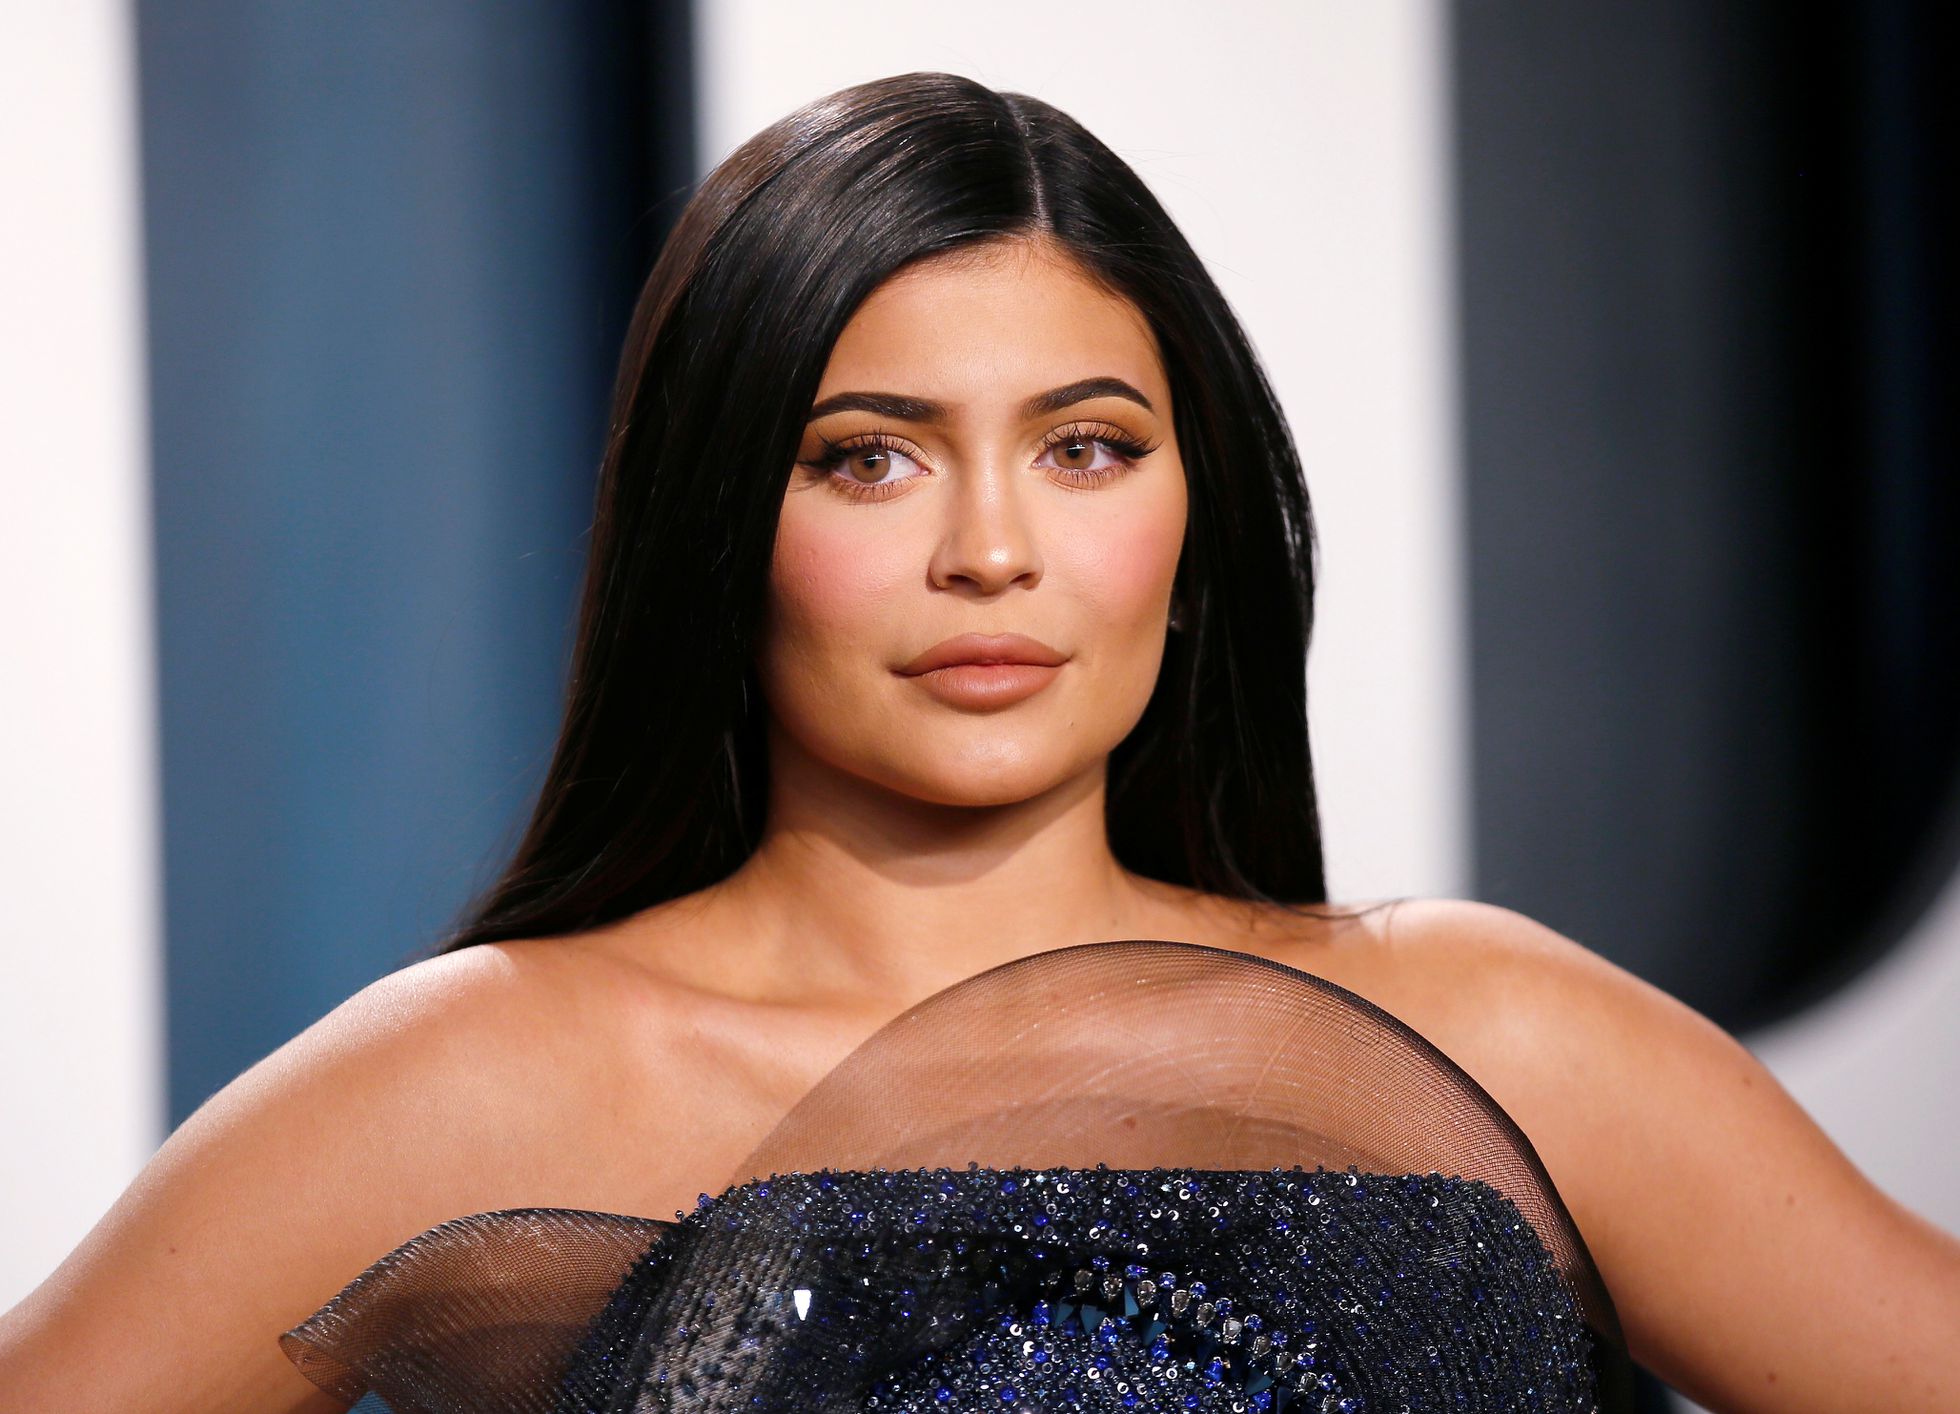 Kylie Jenner pone de moda las cejas decoloradas